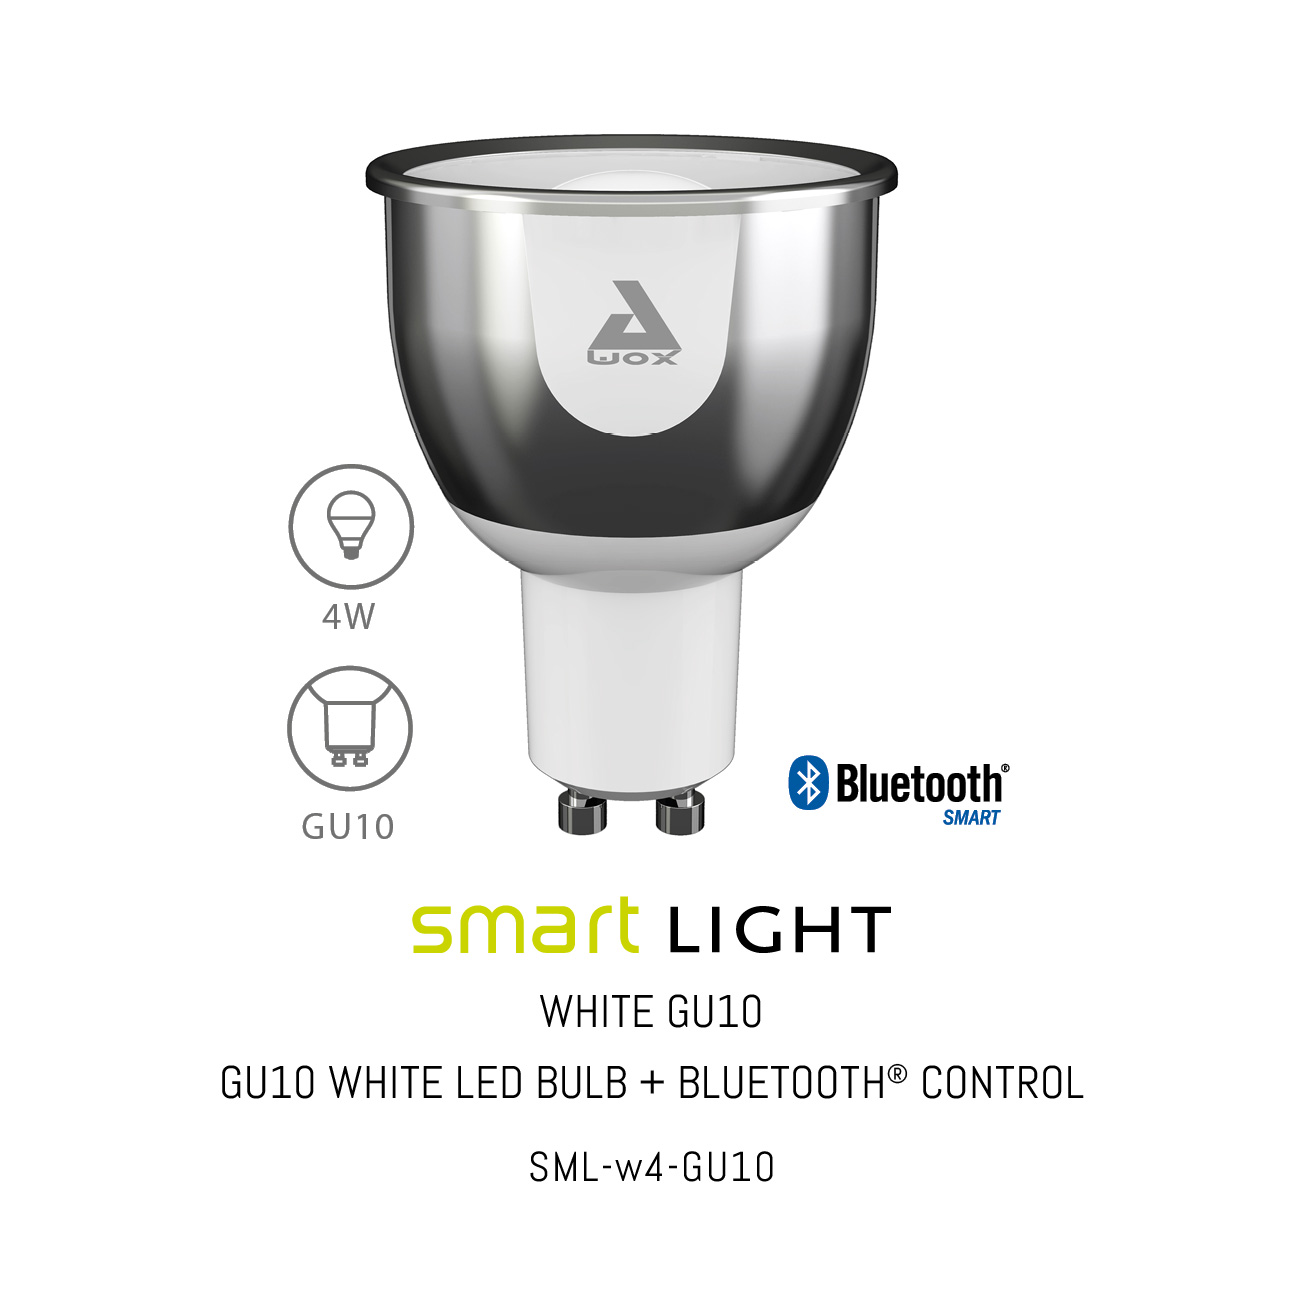 SML-W4 GU10, Smart light BT control, white